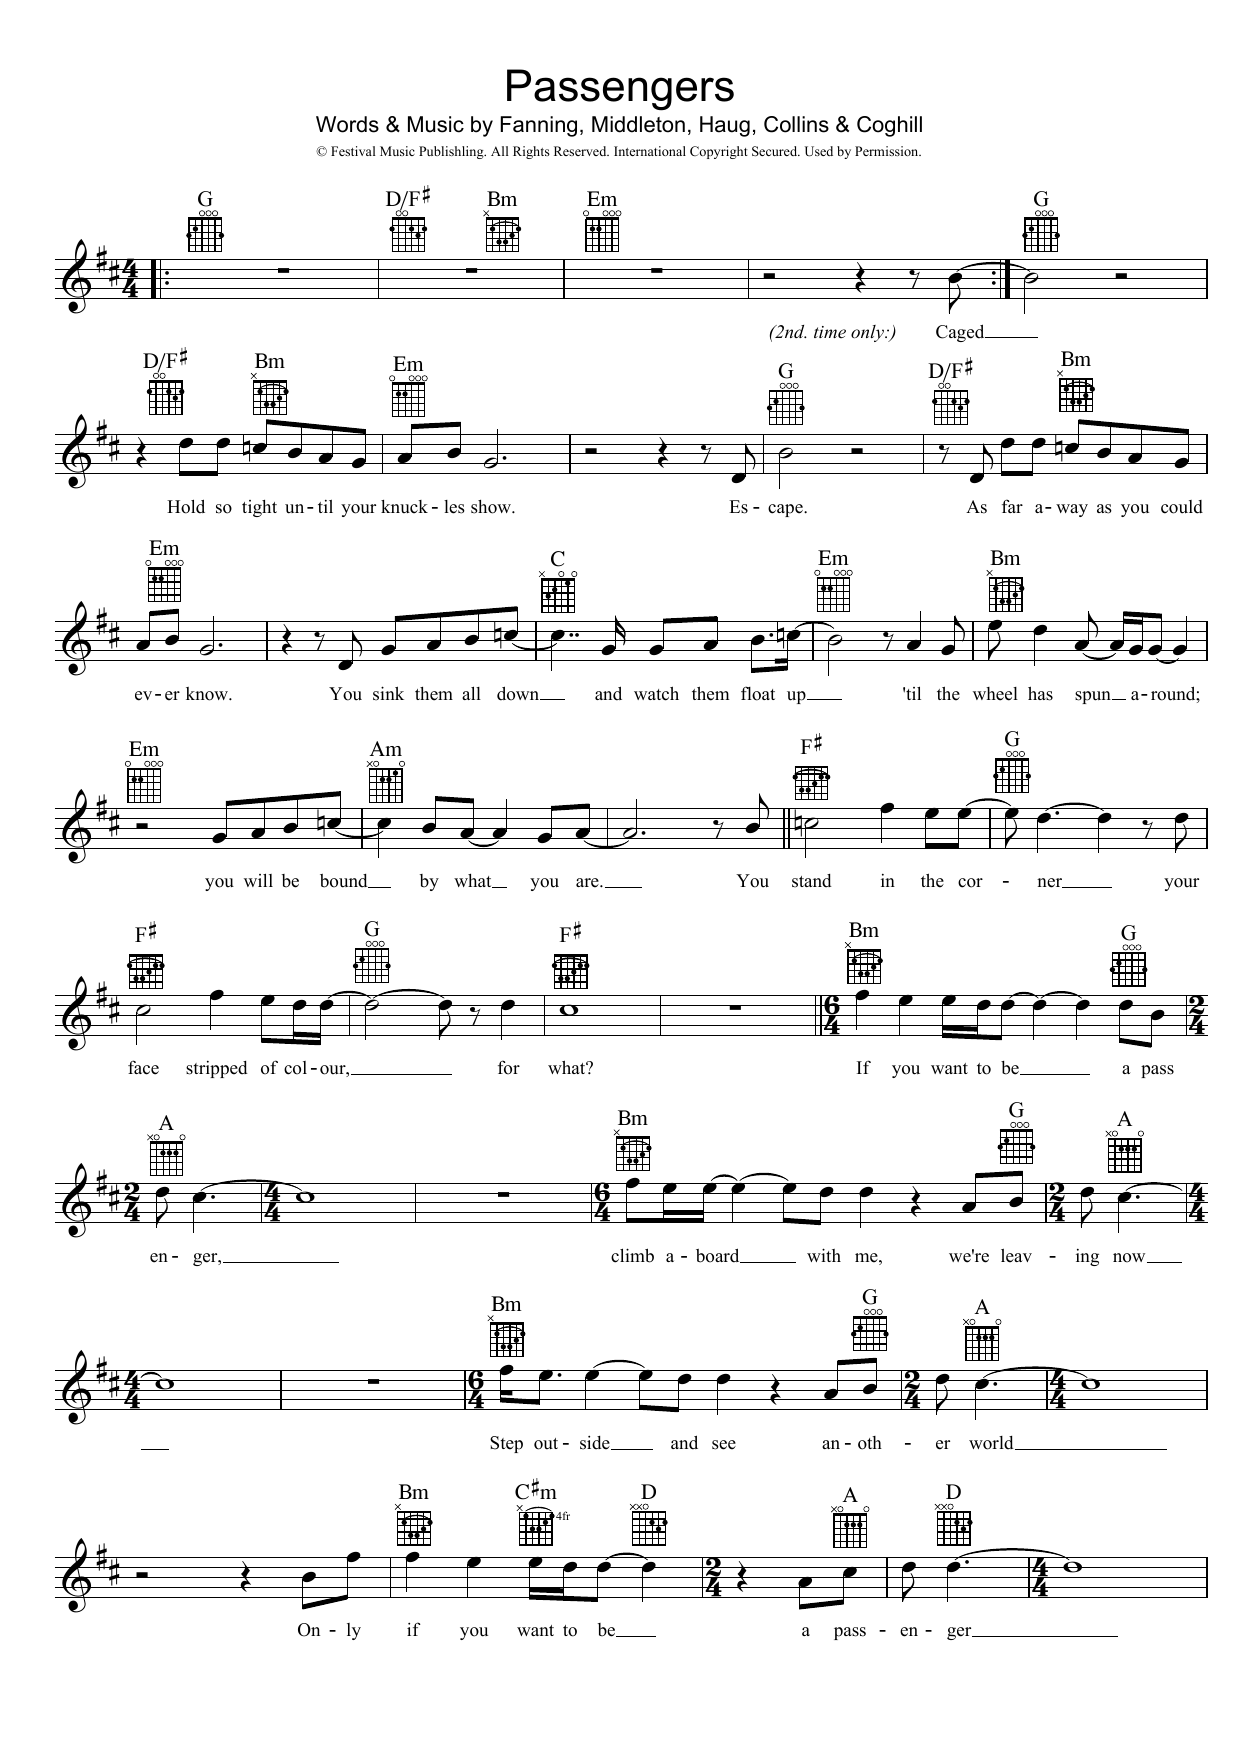 Powderfinger Passengers Sheet Music Notes & Chords for Melody Line, Lyrics & Chords - Download or Print PDF